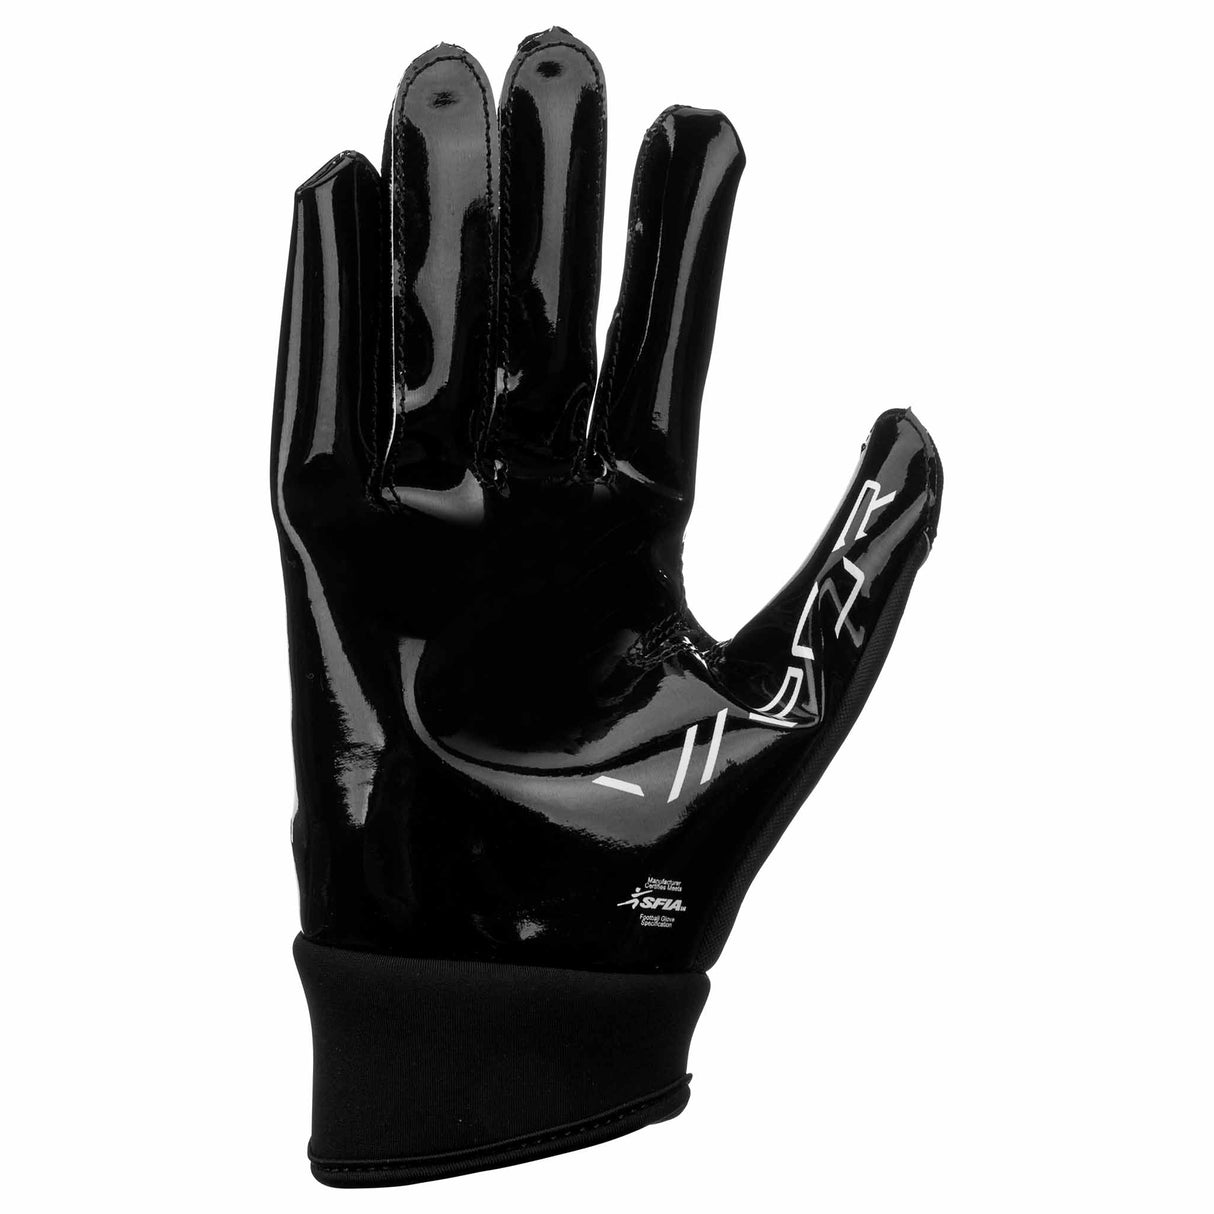 Nike Youth Vapor Jet 8.0 FG gants de football américain pour enfants - Black / Black / White